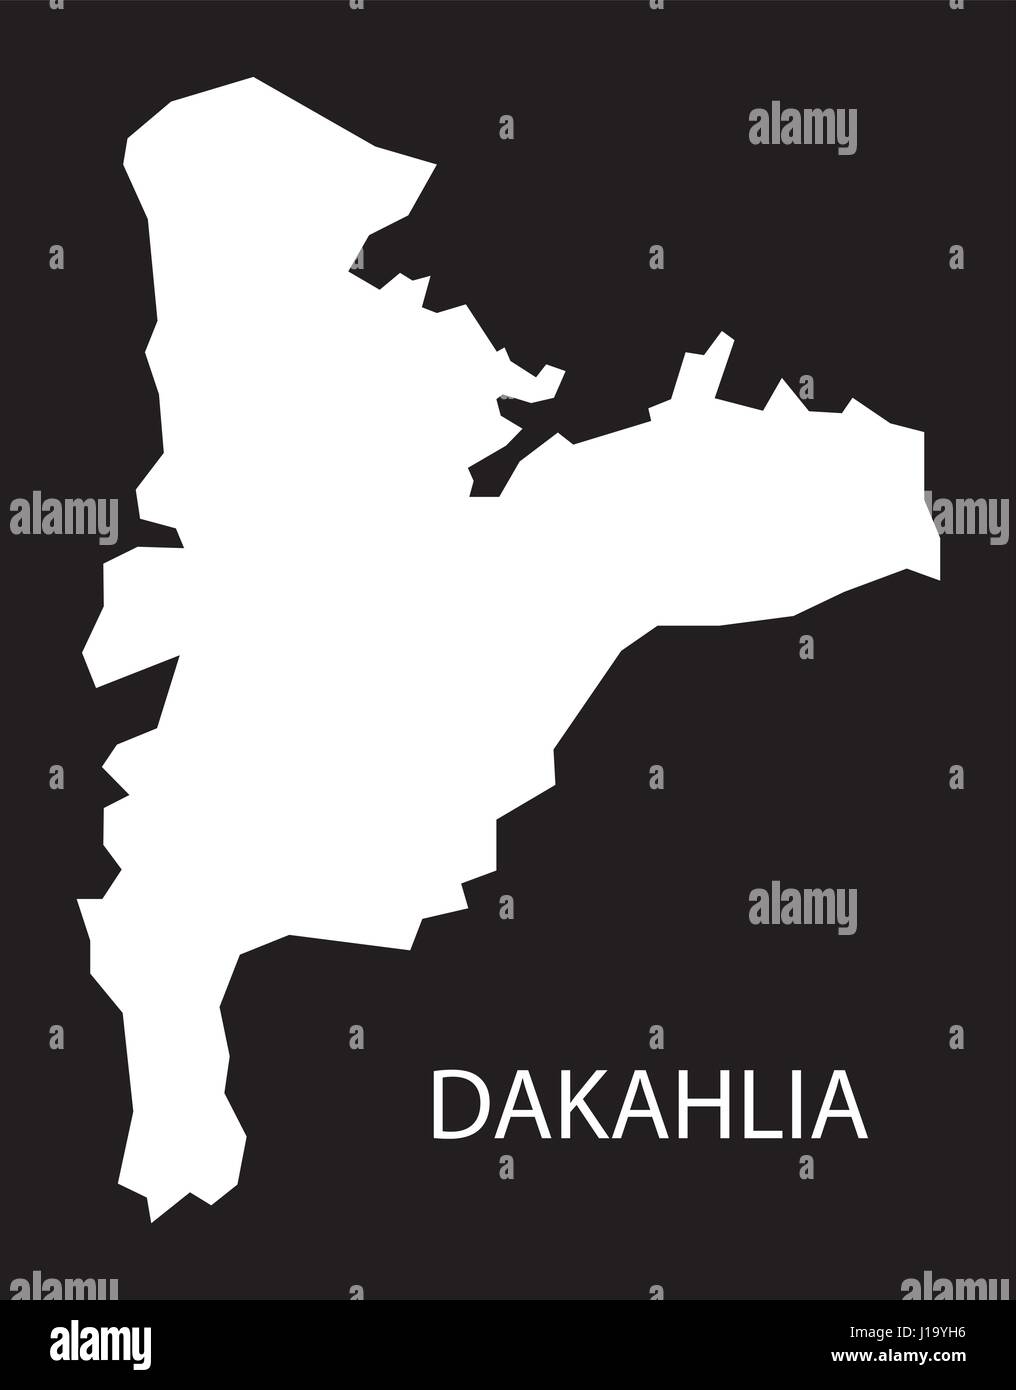 Dakahlia Ägypten Karte schwarz invertiert Silhouette Abbildung Stock Vektor